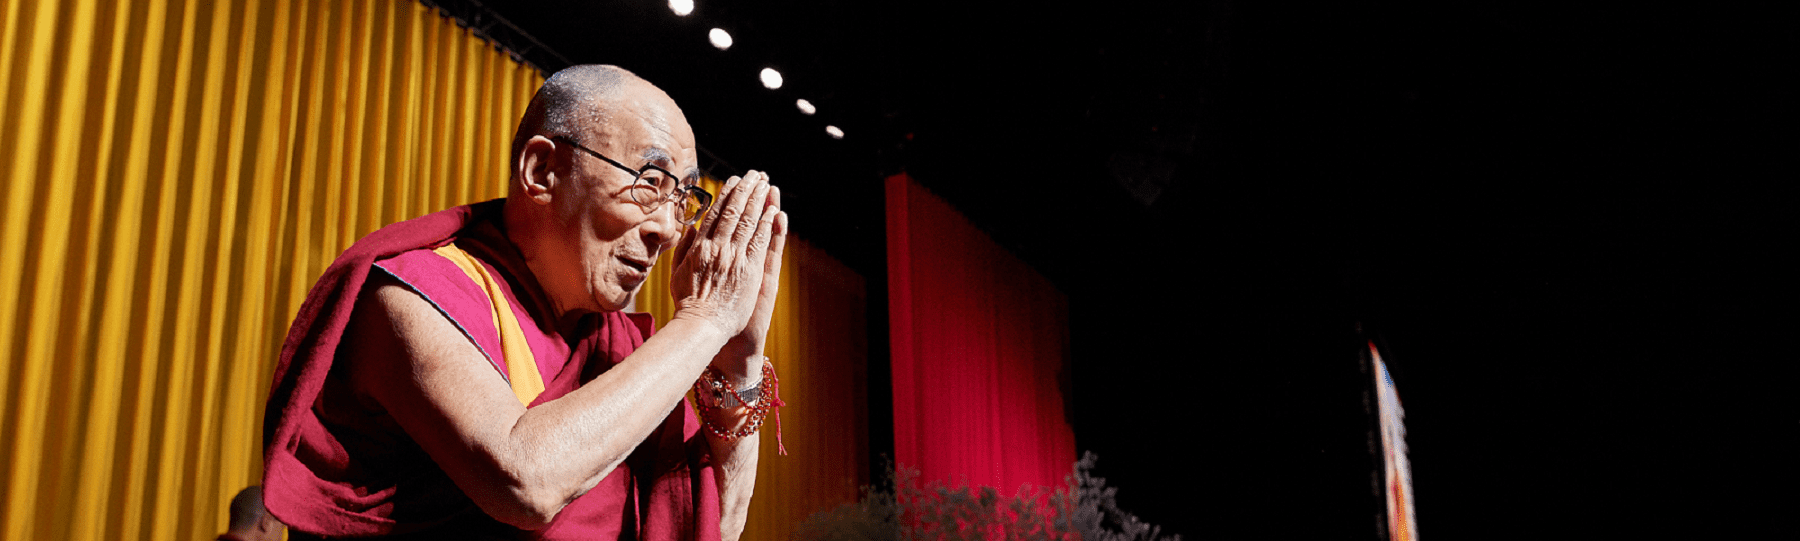 Der Dalai Lama 2016 in Brüssel